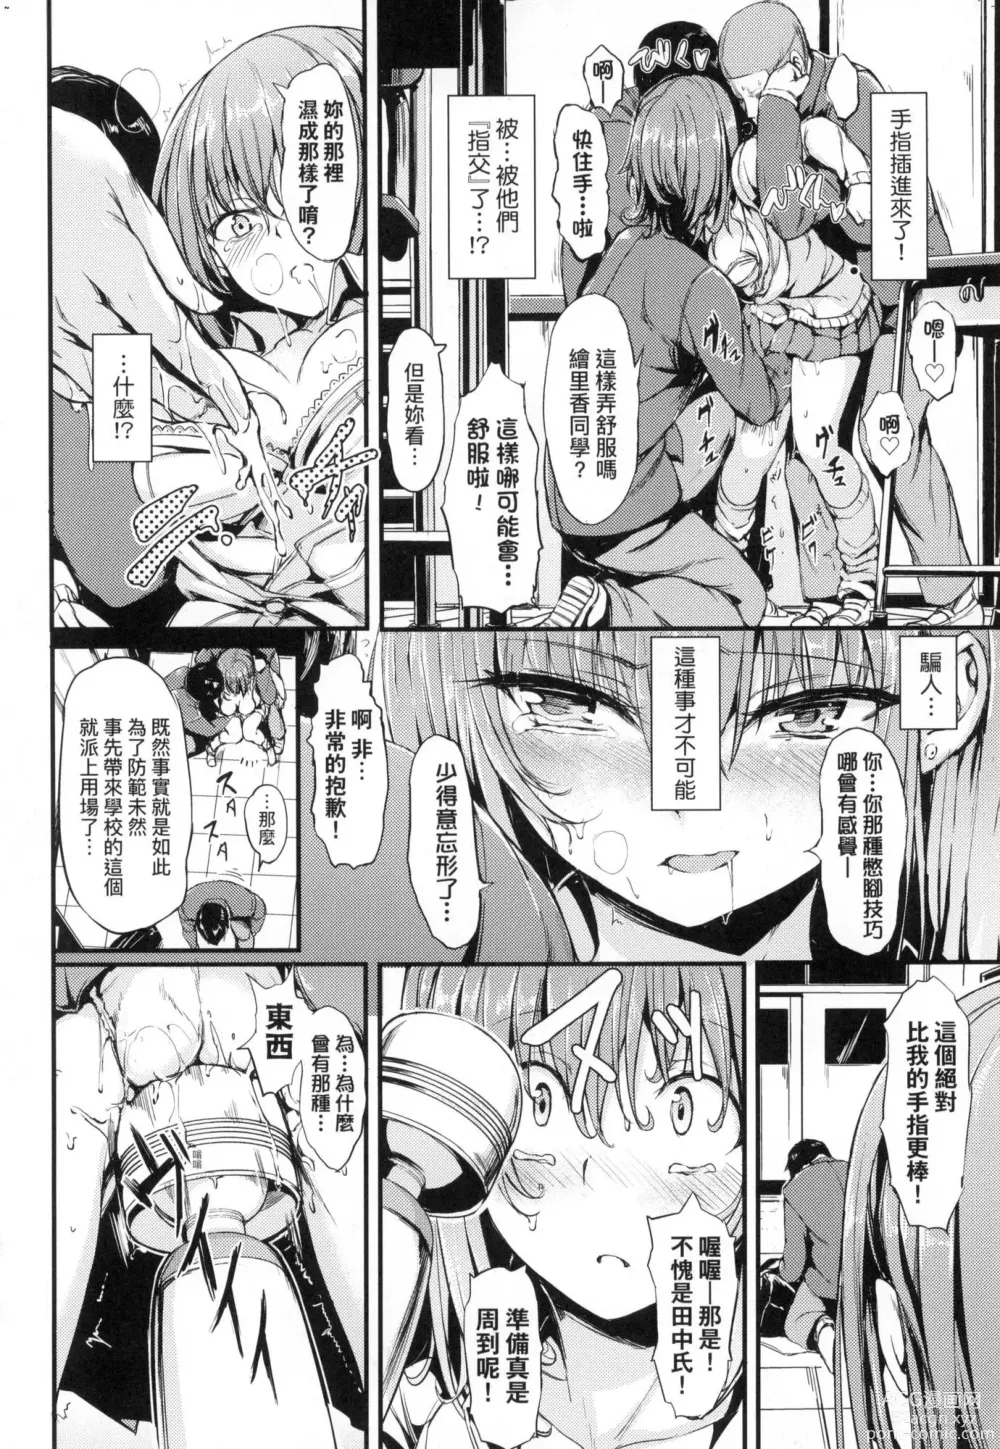 Page 184 of manga 珍愛絕頂♥️ (decensored)